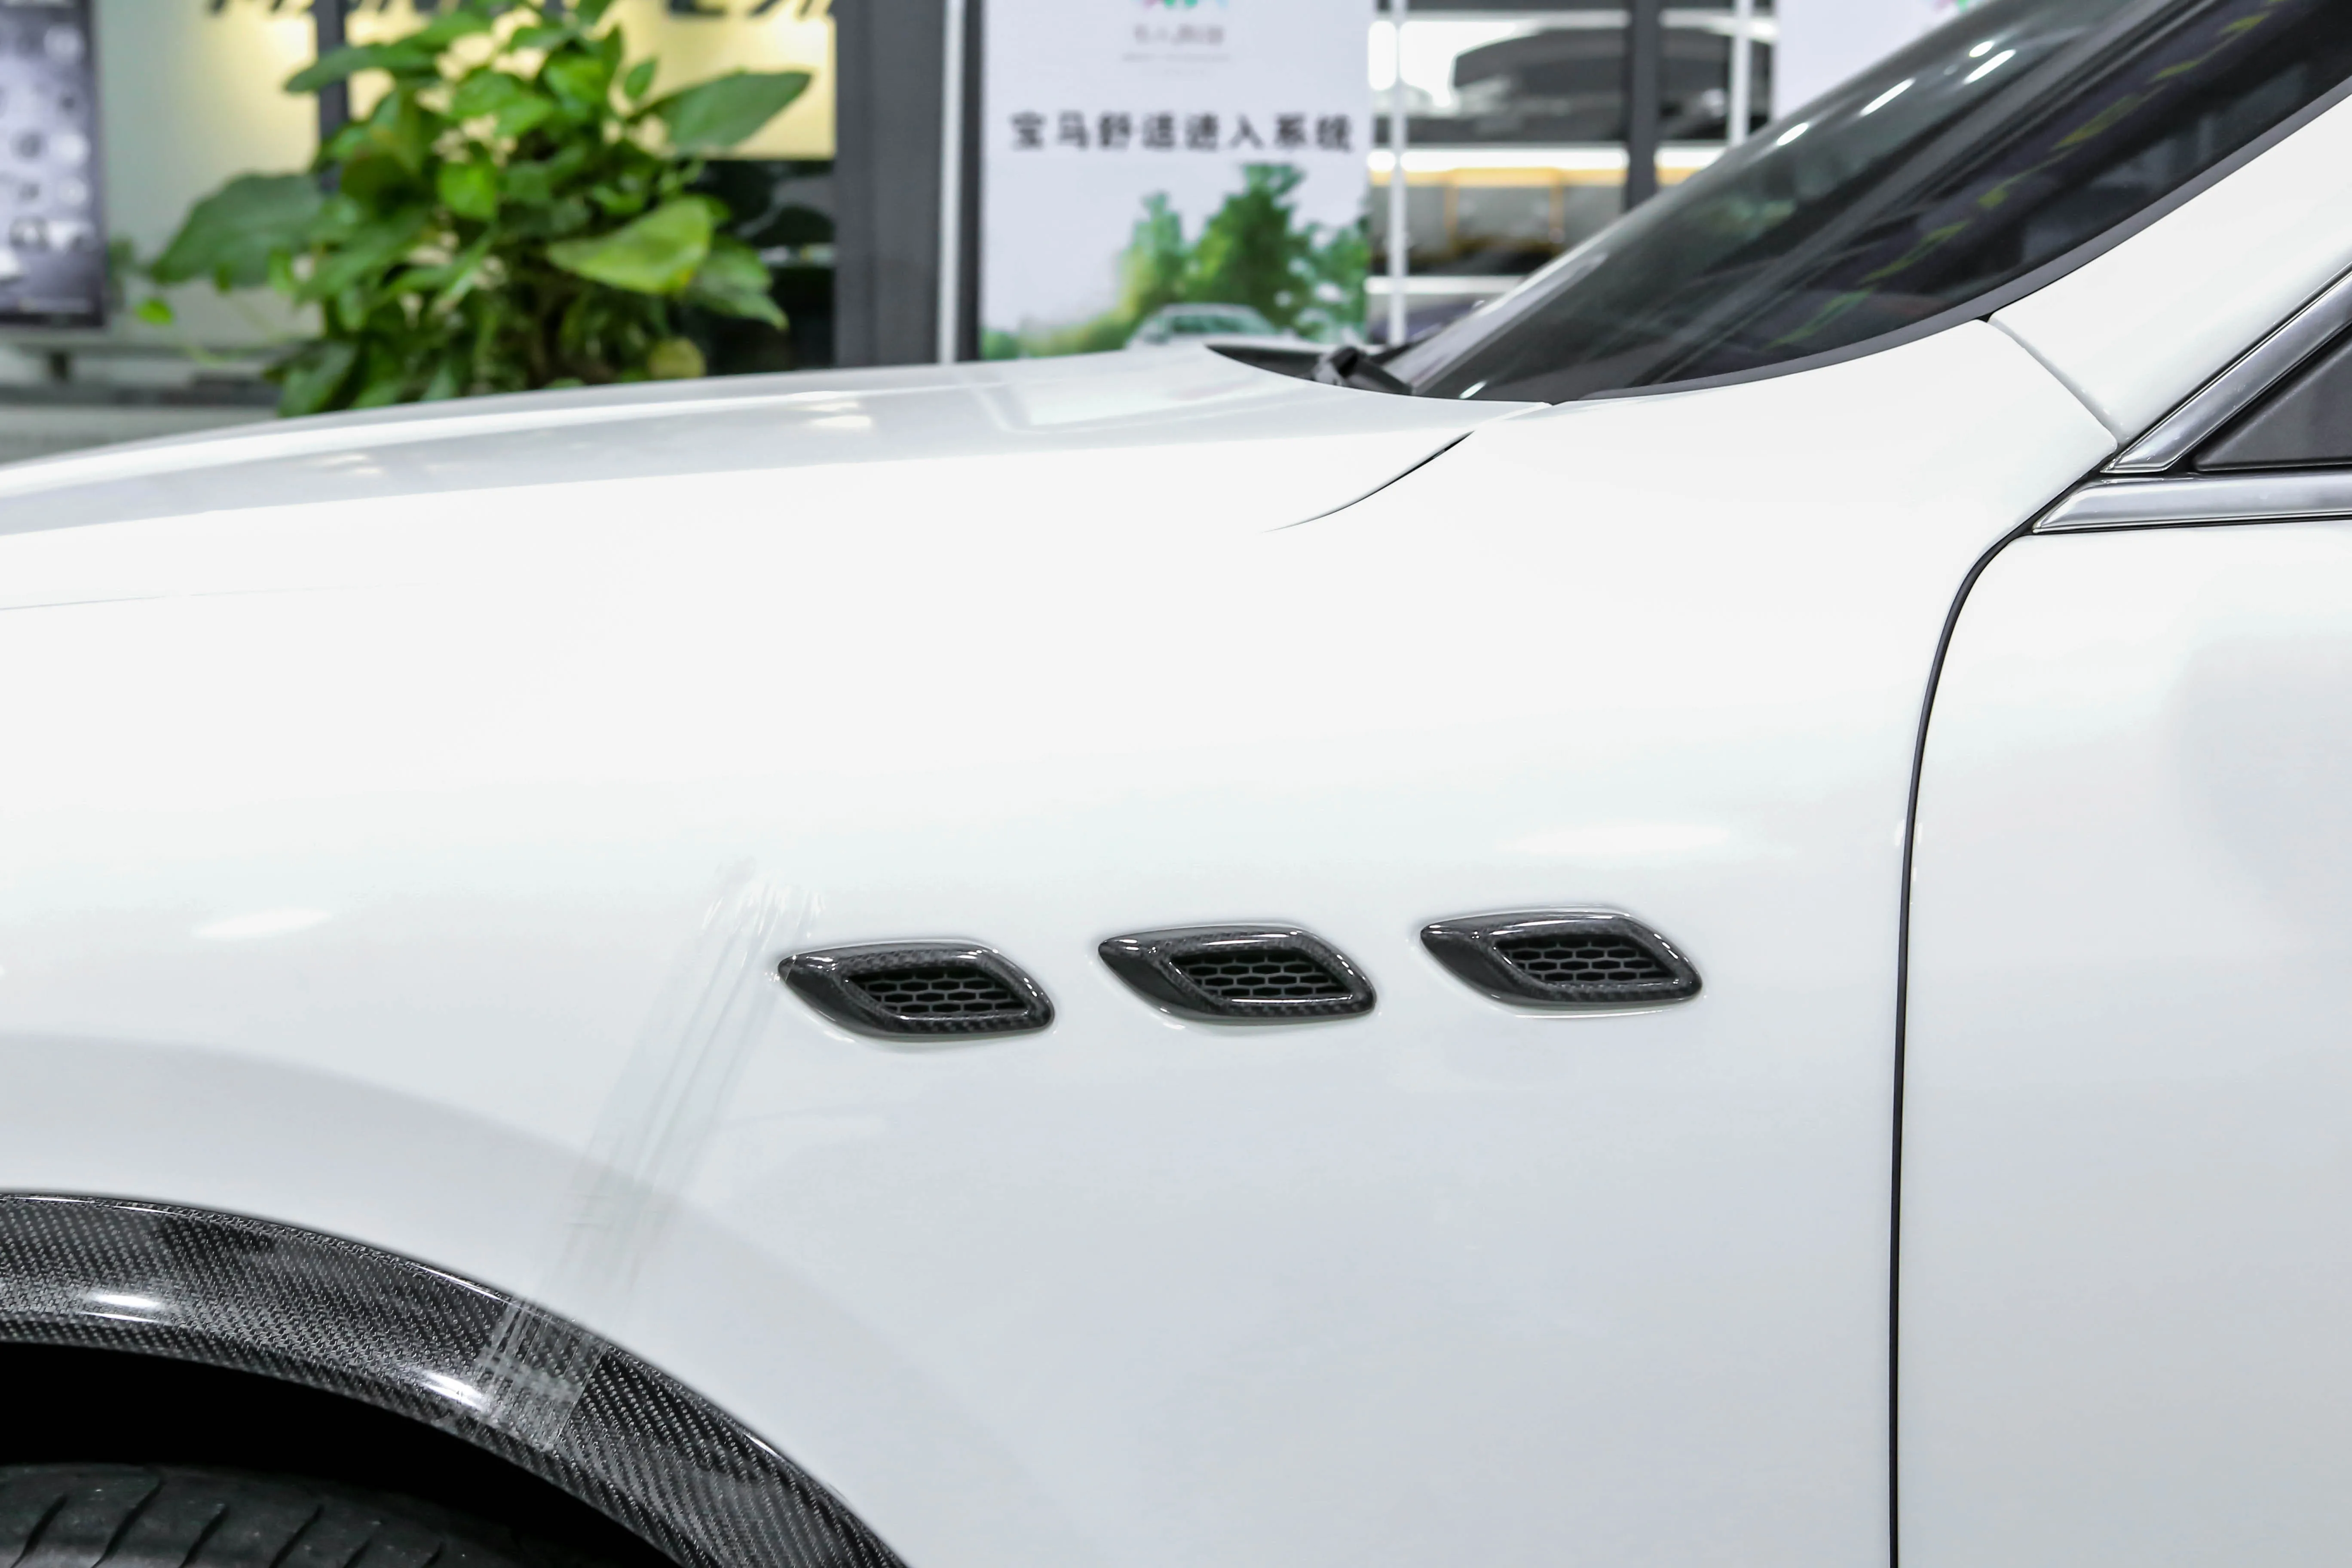 

6pcs Carbon Fiber Car Side Fender Vents Covers Fit Fender Vents Trim for Maserati Levante